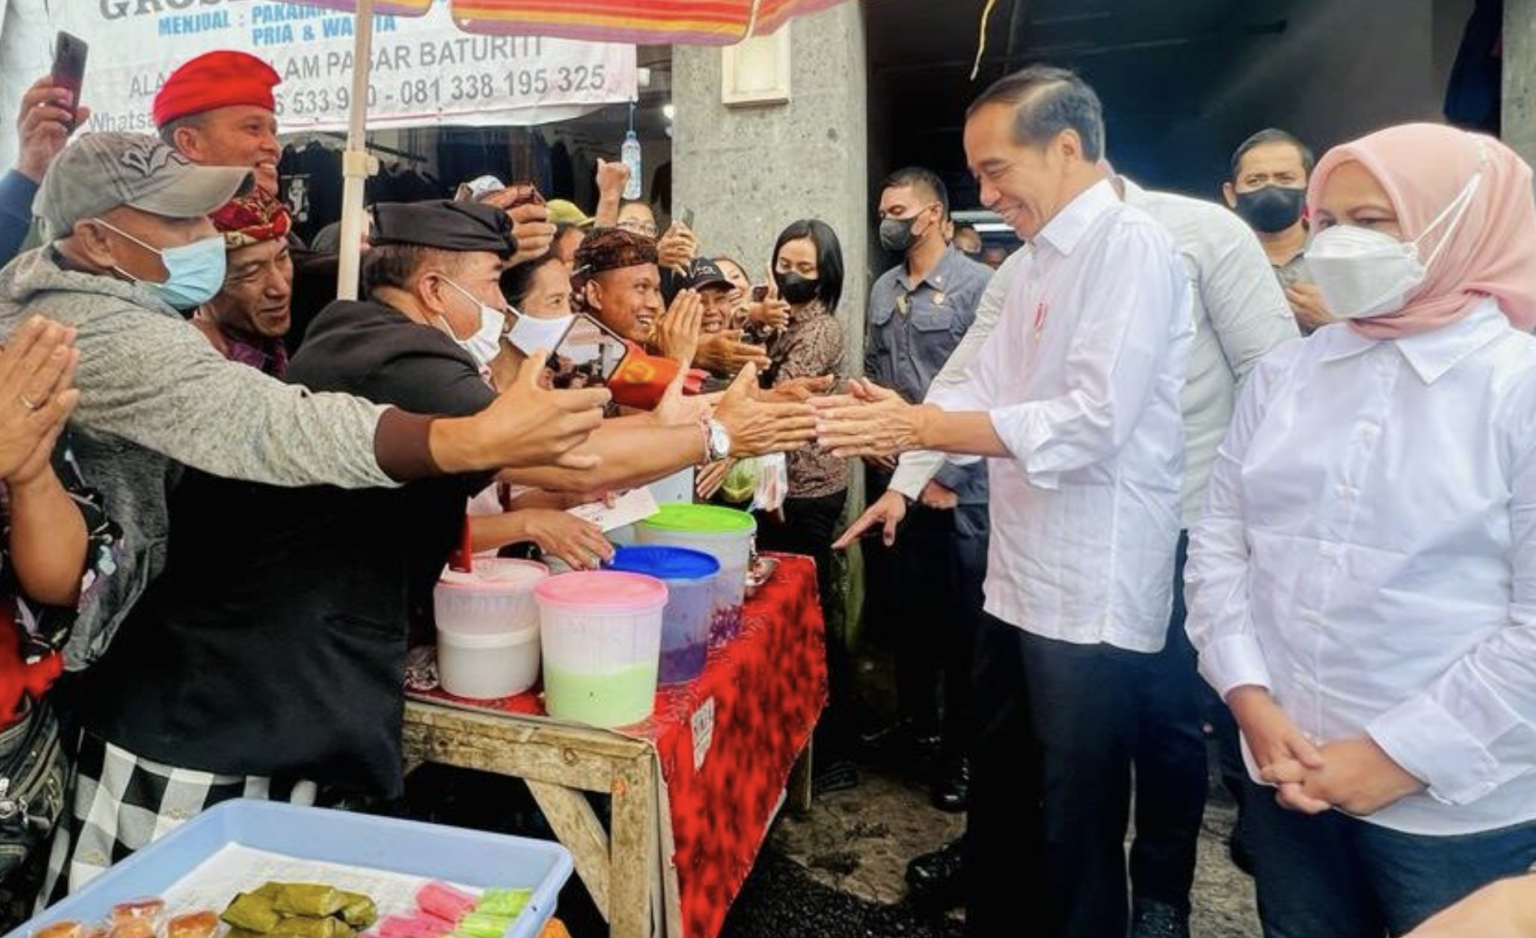 Presiden Joko Widodo meninjau Pasar Baturiti di Kabupaten Tabanan, Provinsi Bali, pada Kamis, 2 Februari 2023. Foto: BPMI Setpres